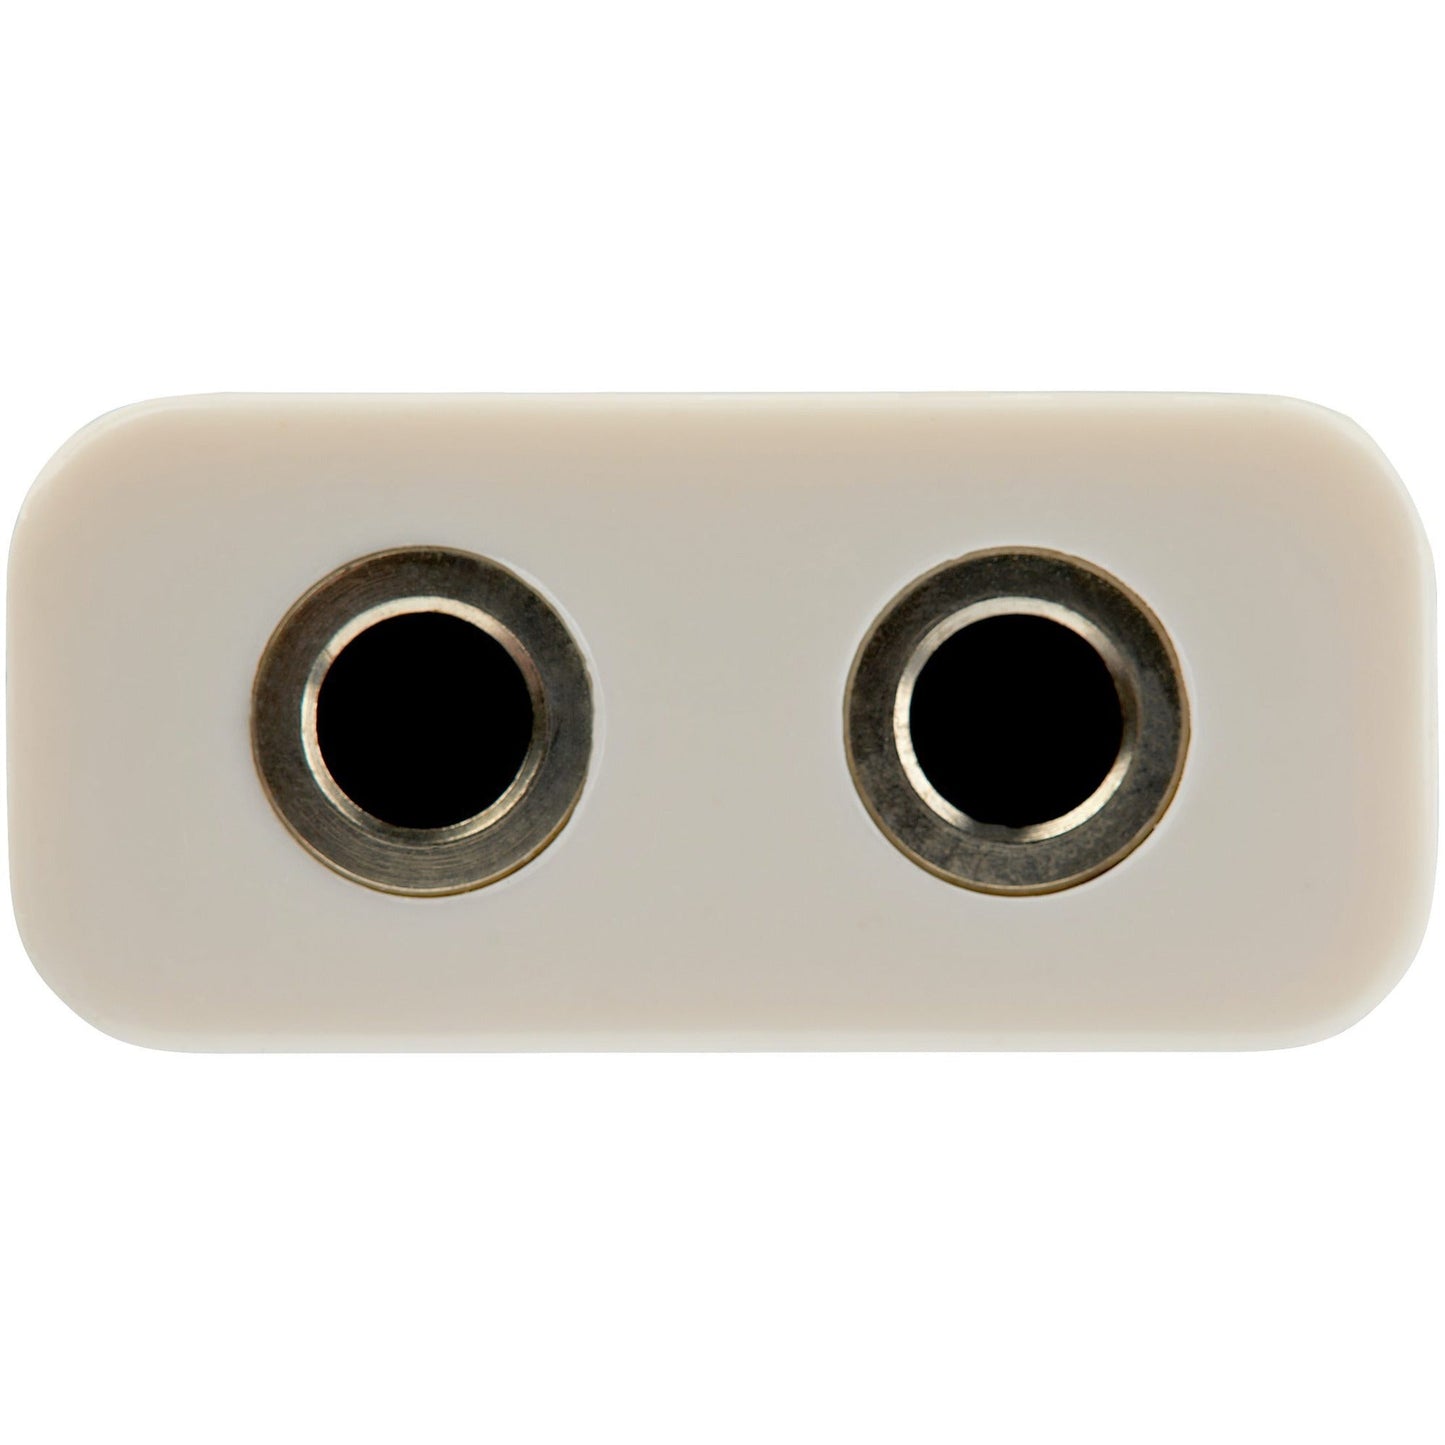 StarTech.com 3.5mm 4 Position to 2x 3 Position 3.5mm Headset Splitter Adapter M/F - White